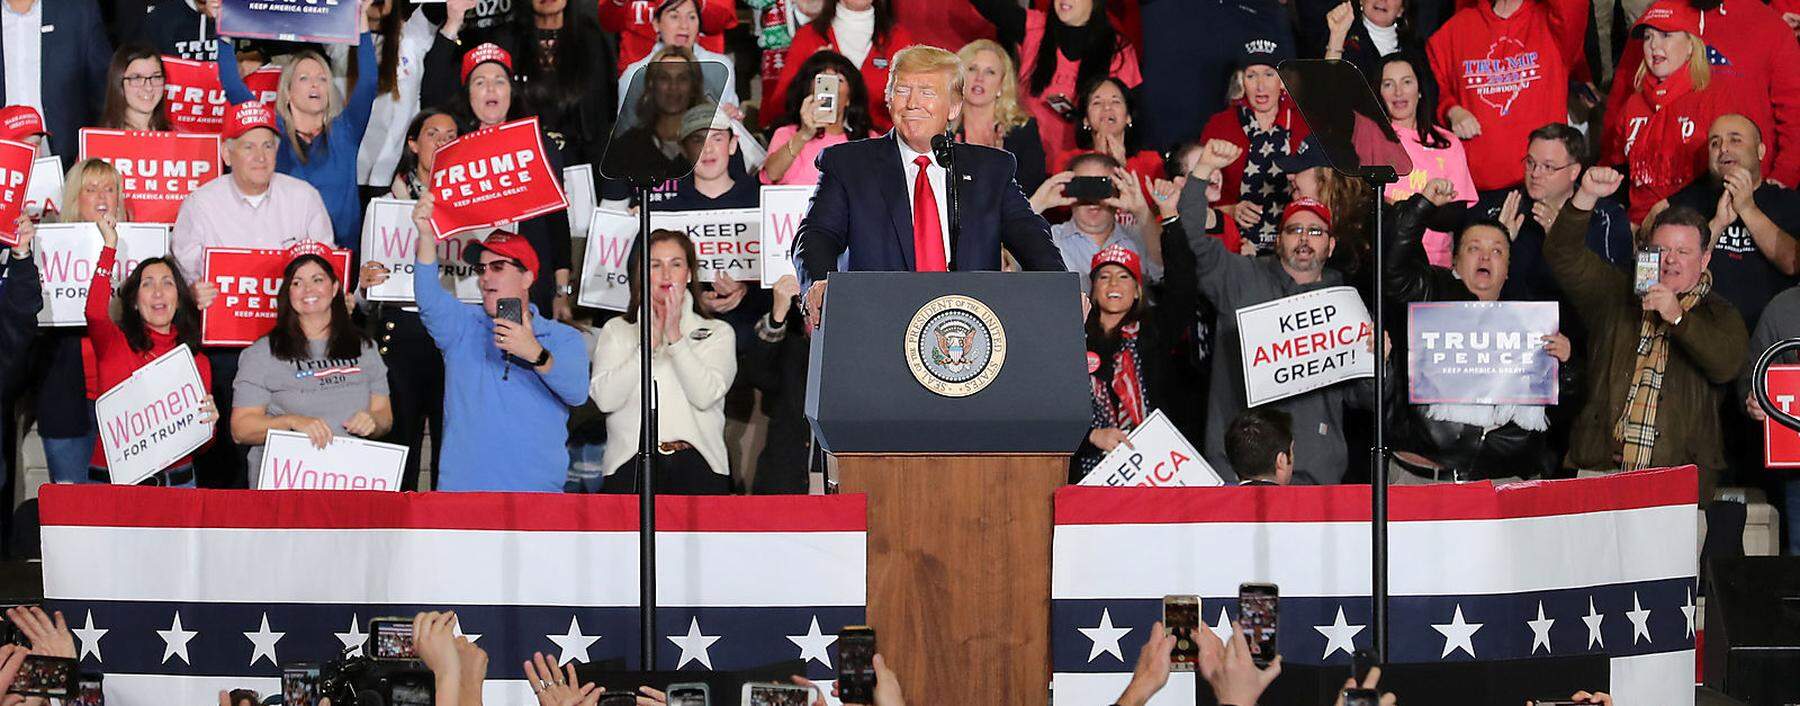 U.S. President Donald Trump campaign rally in Wildwood